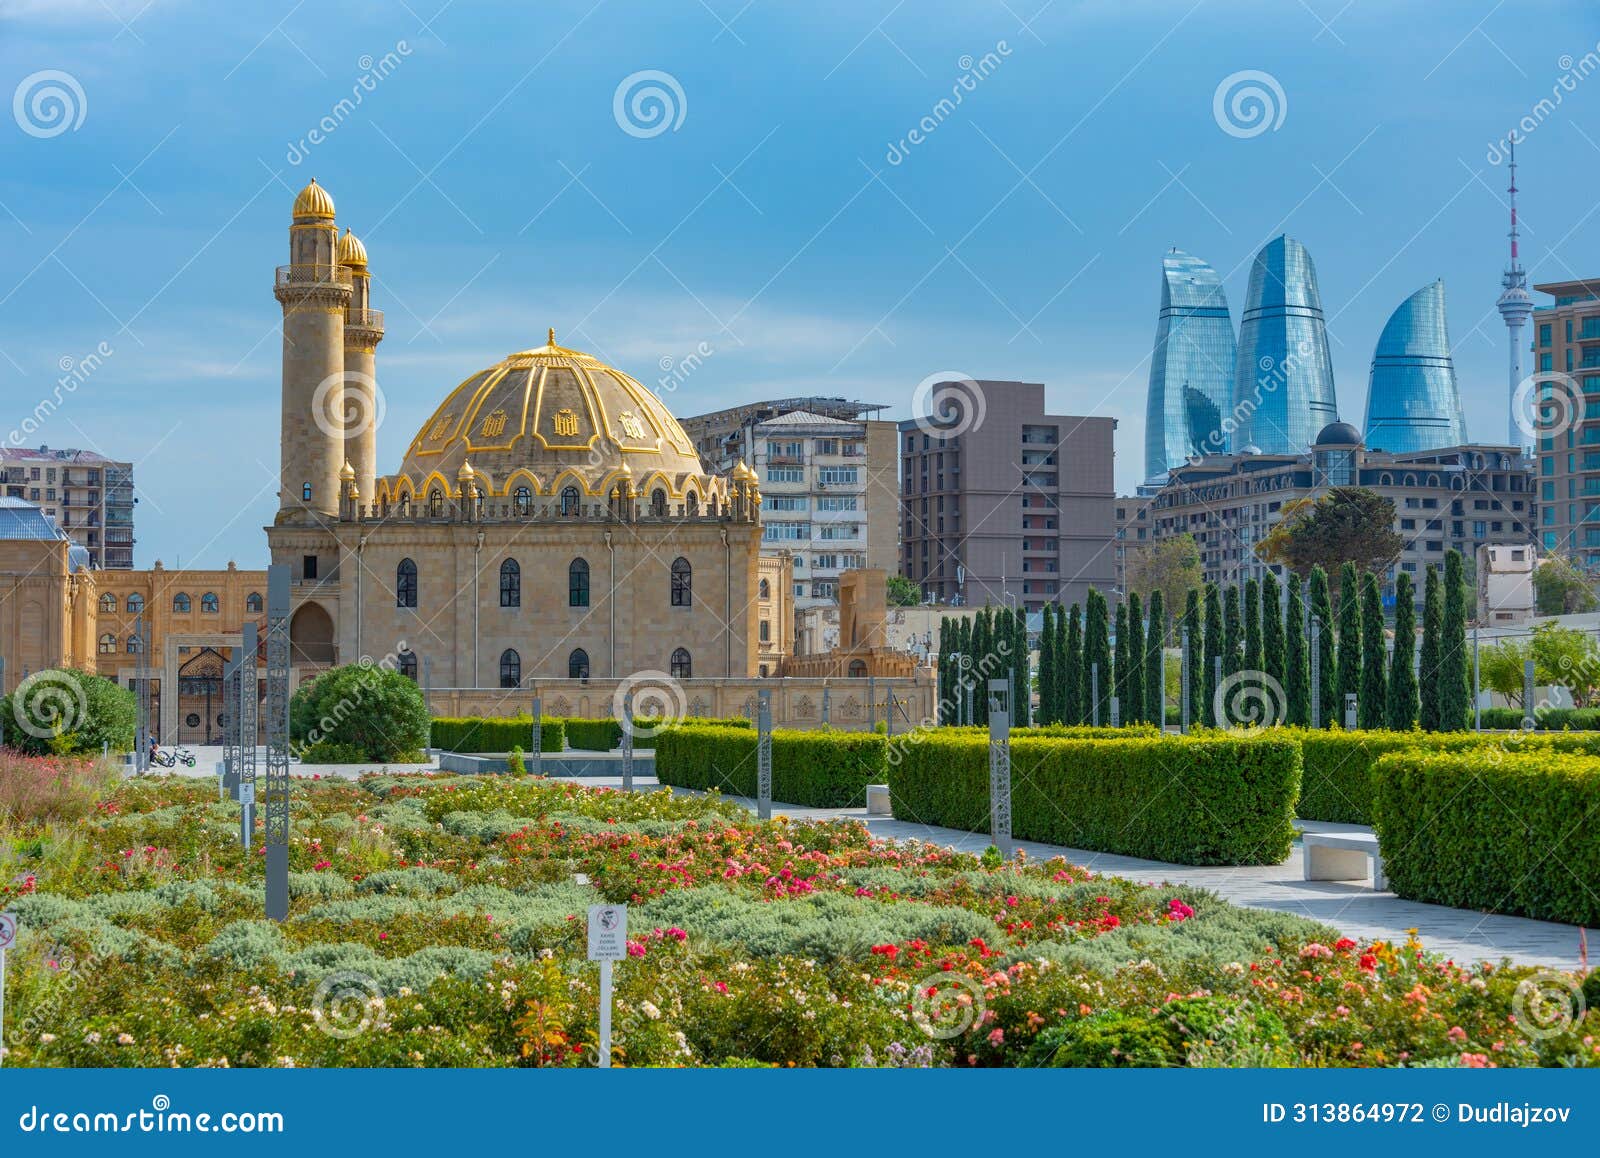 taza pir mosque in baku, azerbaijan